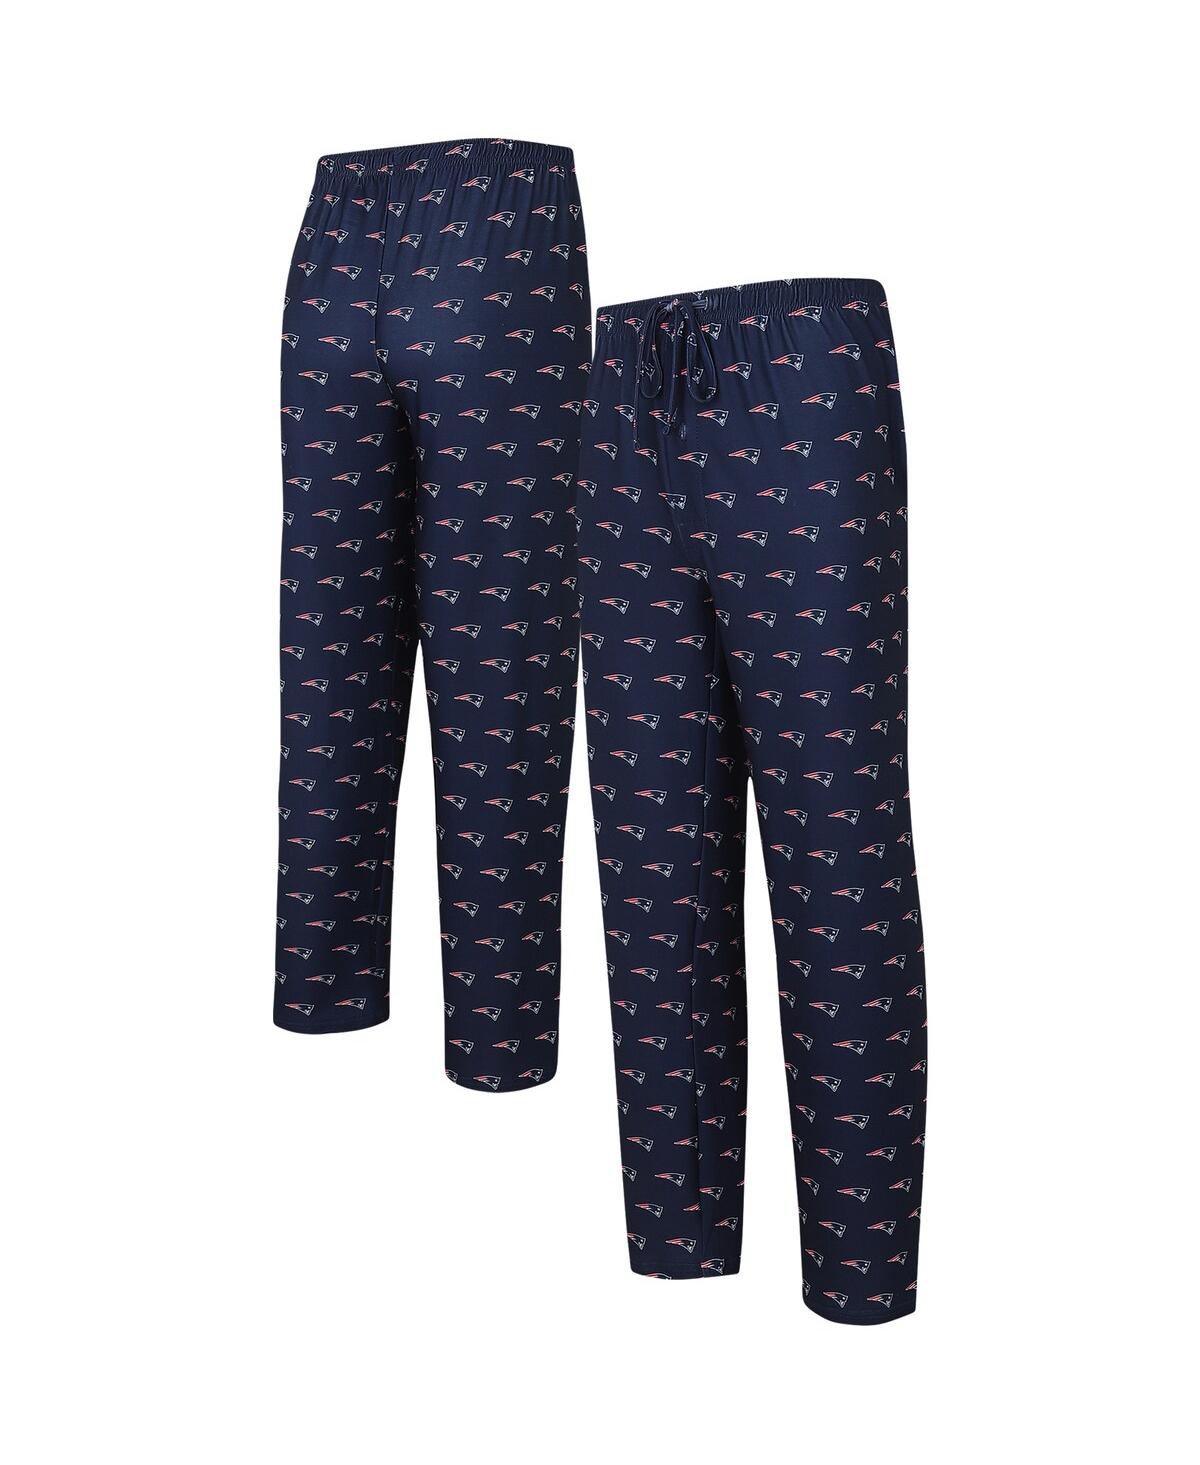 Men's Concepts Sport Navy New England Patriots Gauge Allover Print Knit Pants - Navy